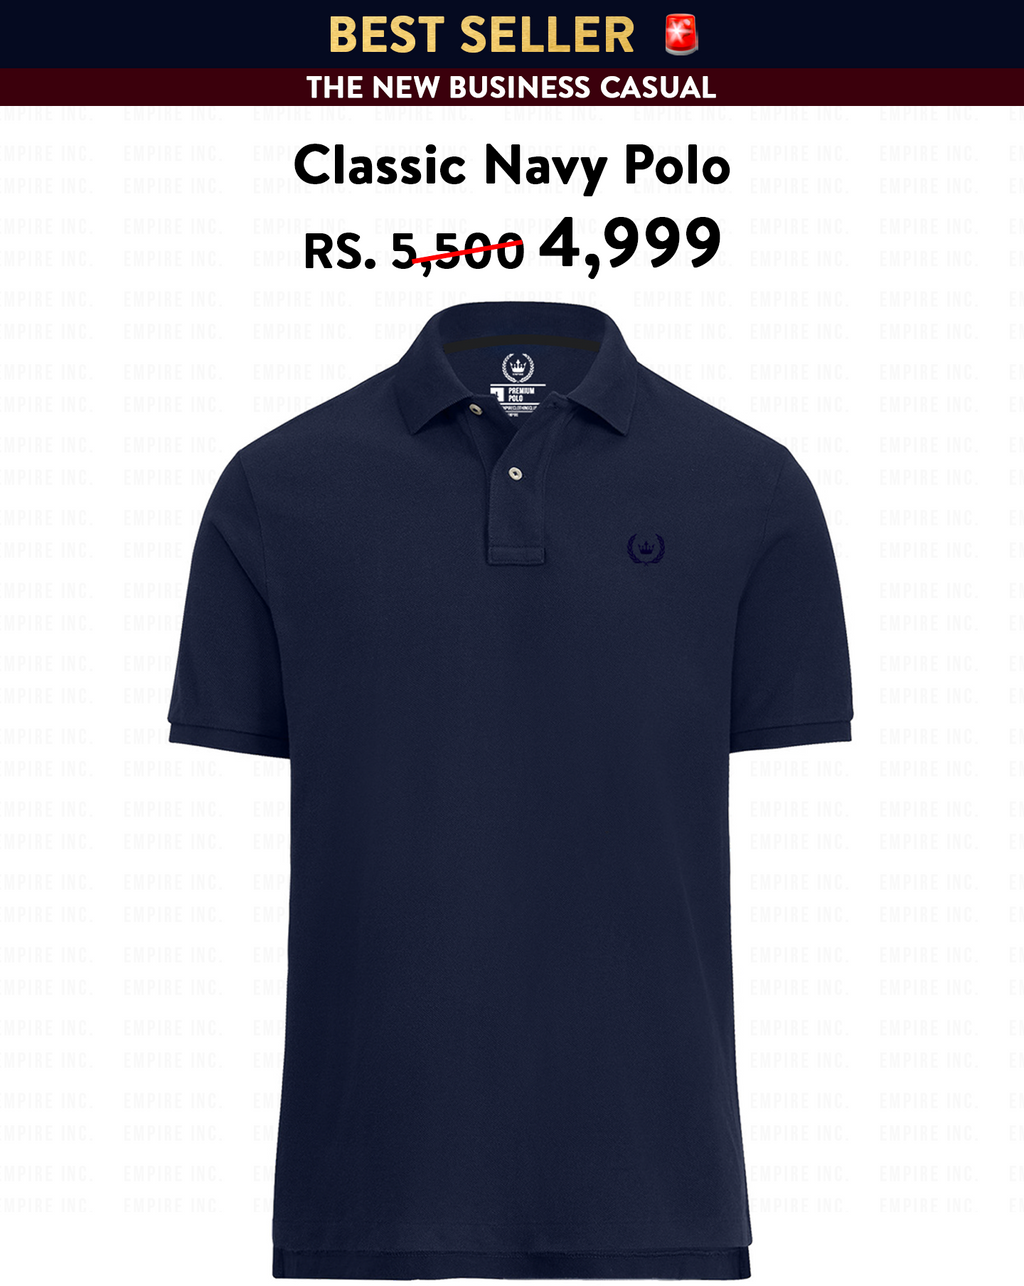 Classic Navy Polo